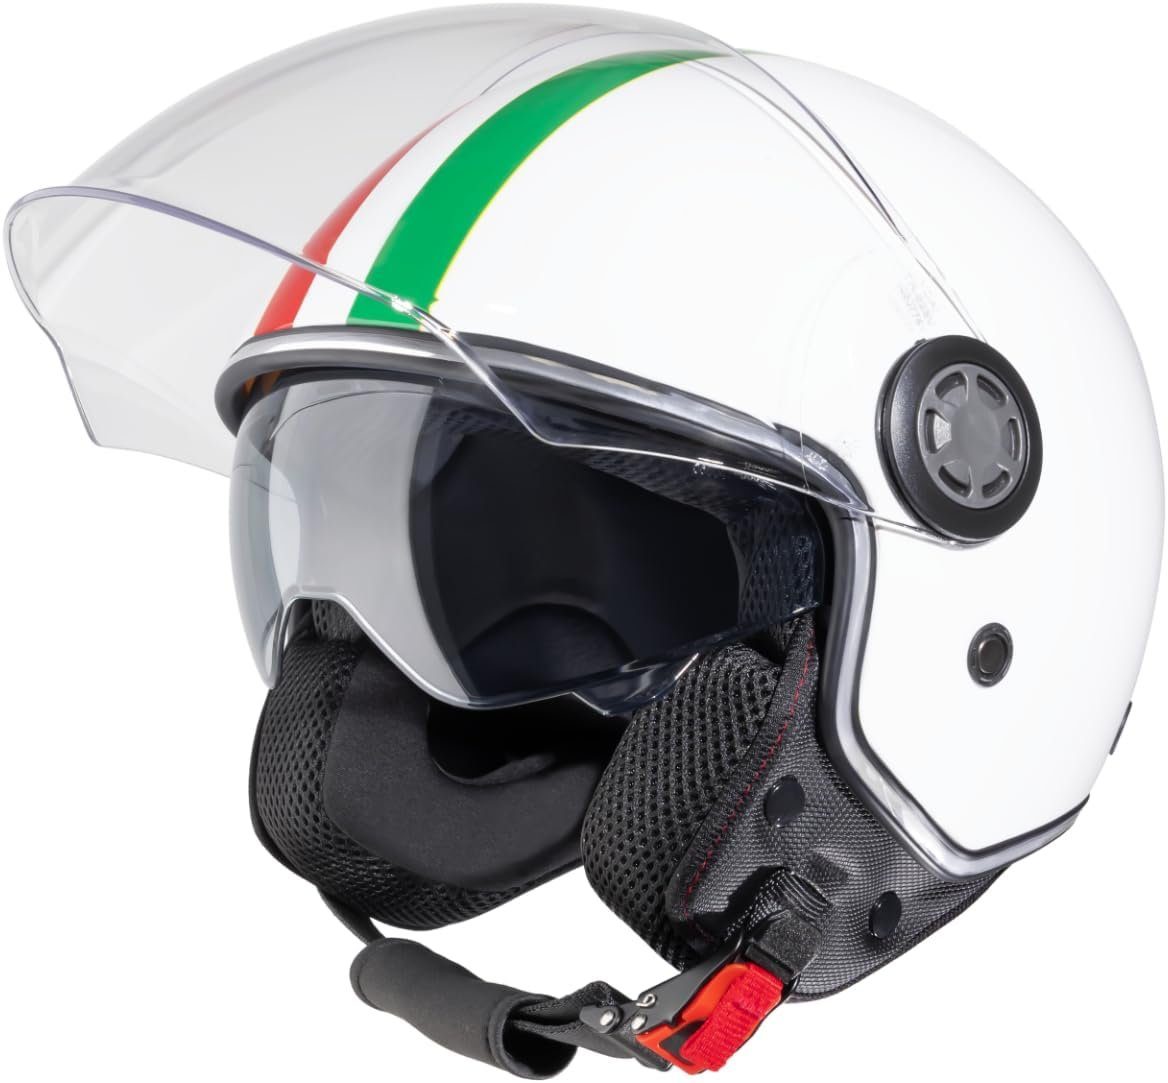 VINZ Motorradhelm Varese Jethelm mit Doppelvisier mit Italienische Flagge,  Vollvisierhelm Mopedhelm, Motorradhelm Full-Face Helme, In Gr. XS-XL